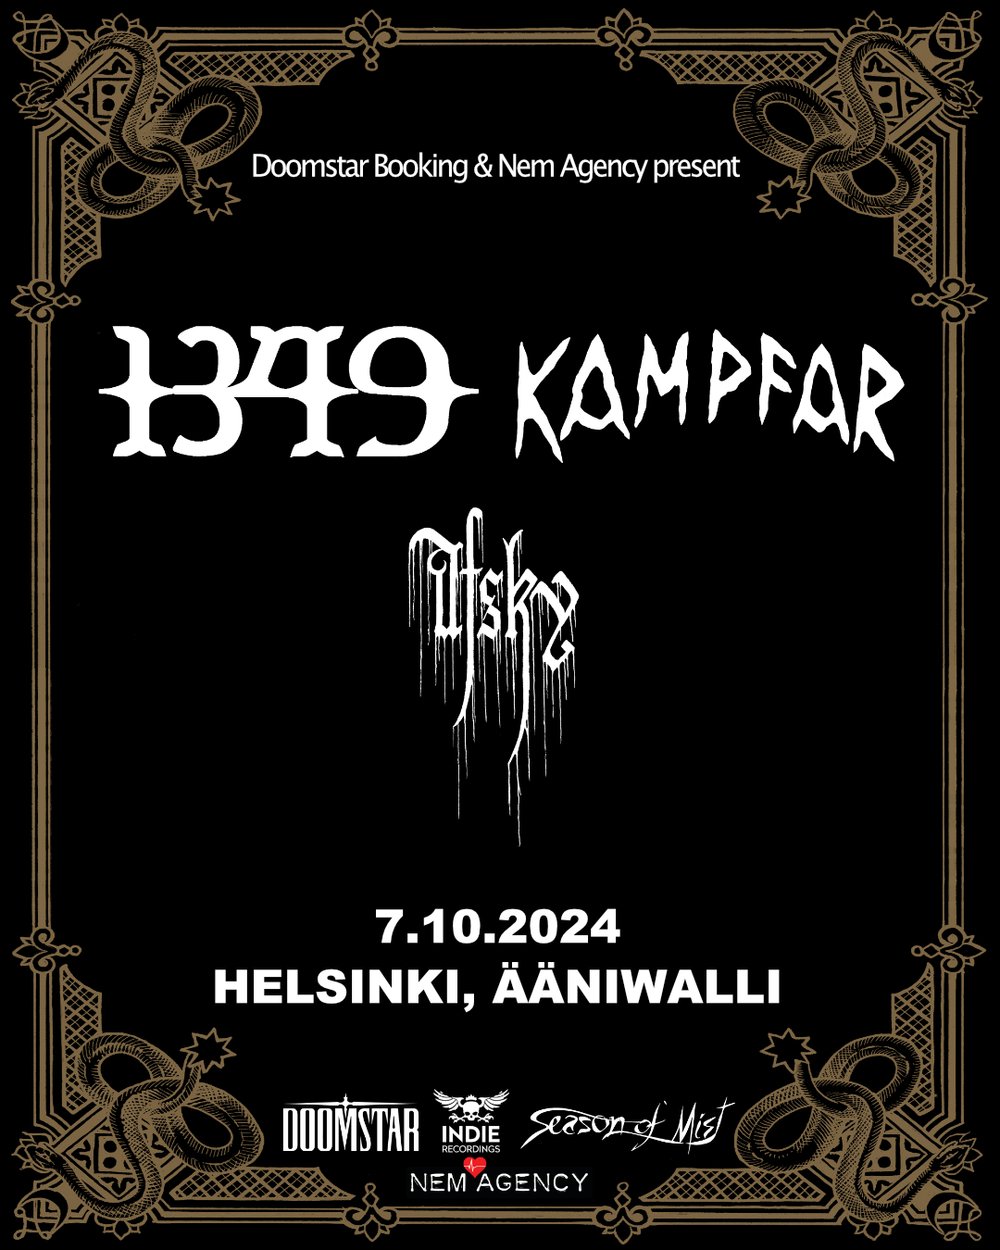 1349 (NOR), Kampfar (NOR), Afsky (DEN)